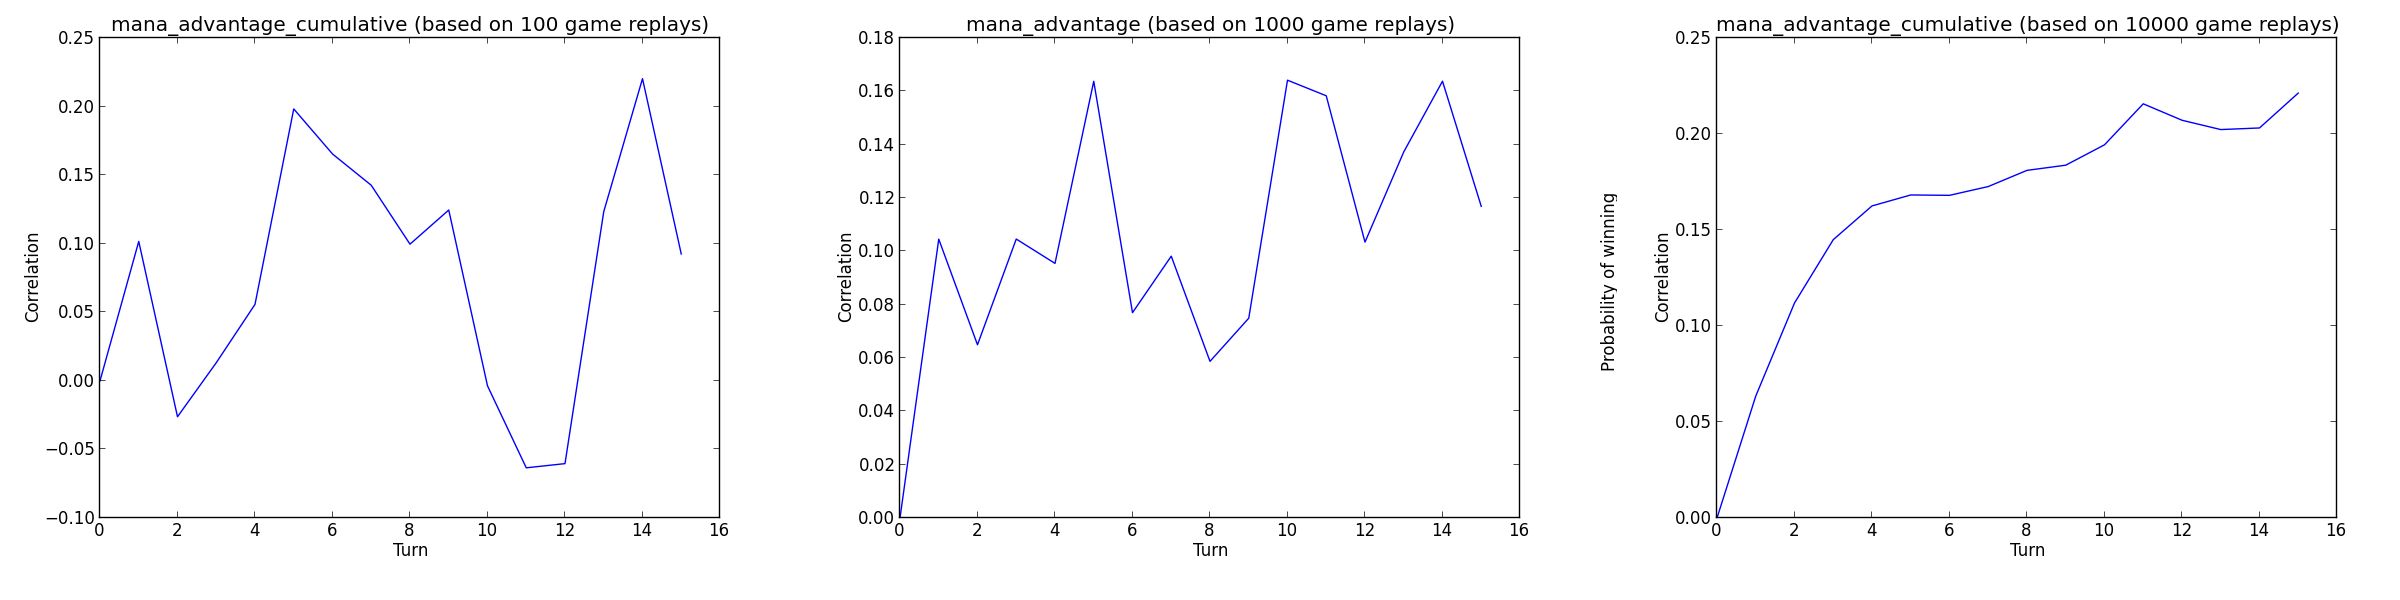 Mana advantage with less replay charts